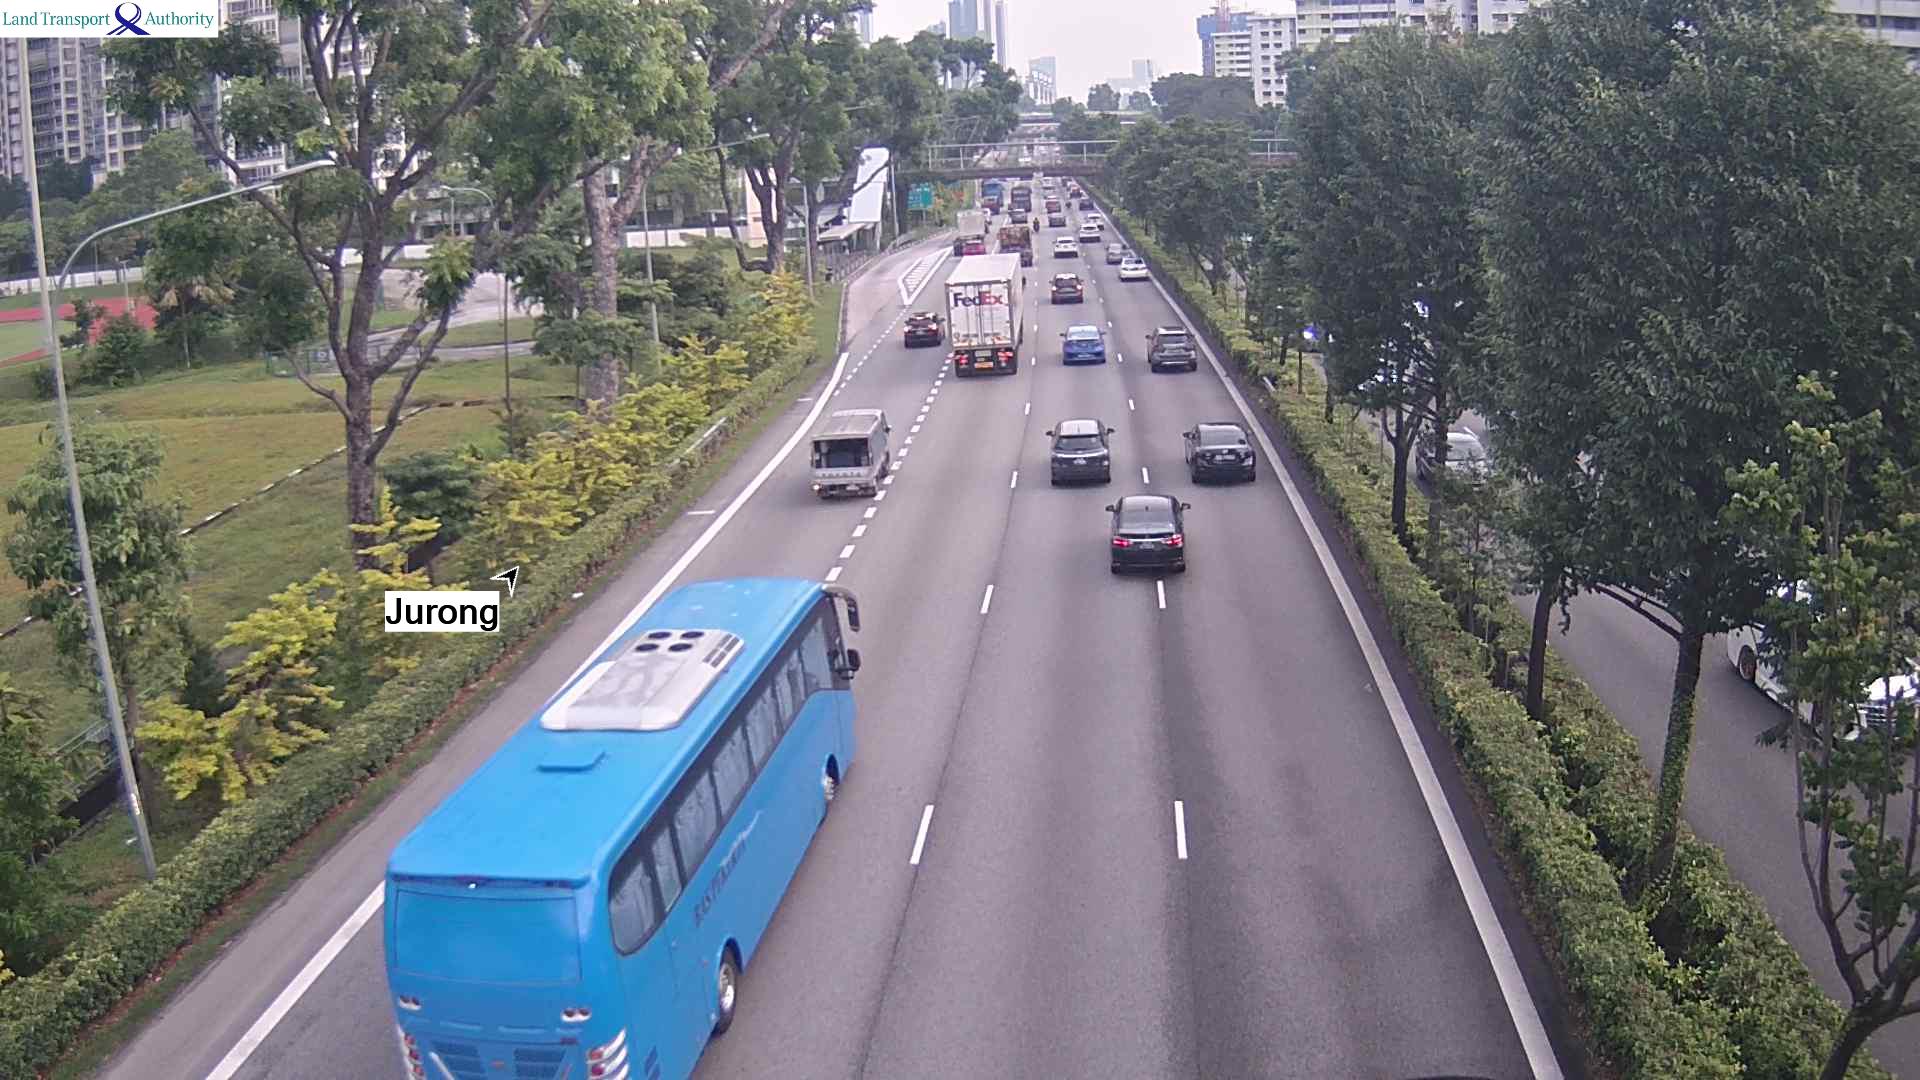 View from Near West Coast Walk - Ayer Rajah Expressway (AYE) - Singapore